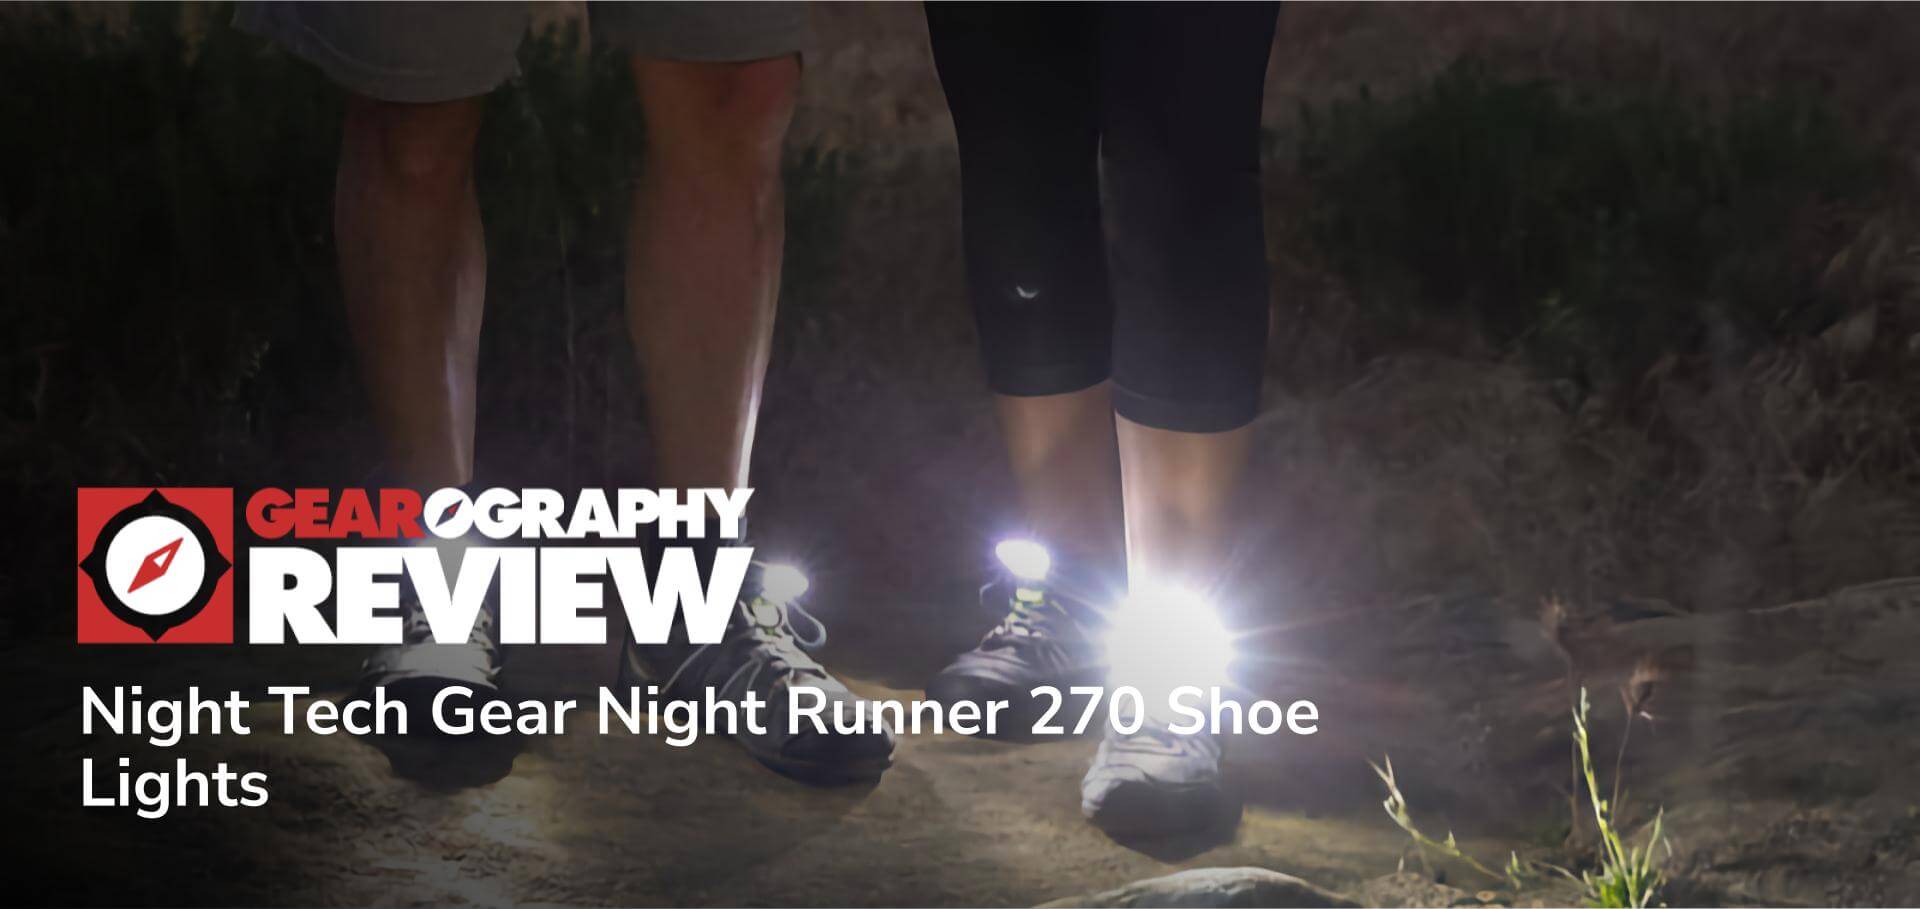 REVIEW: Night Runner 270 Shoe Lights - GEAROGRAPHY